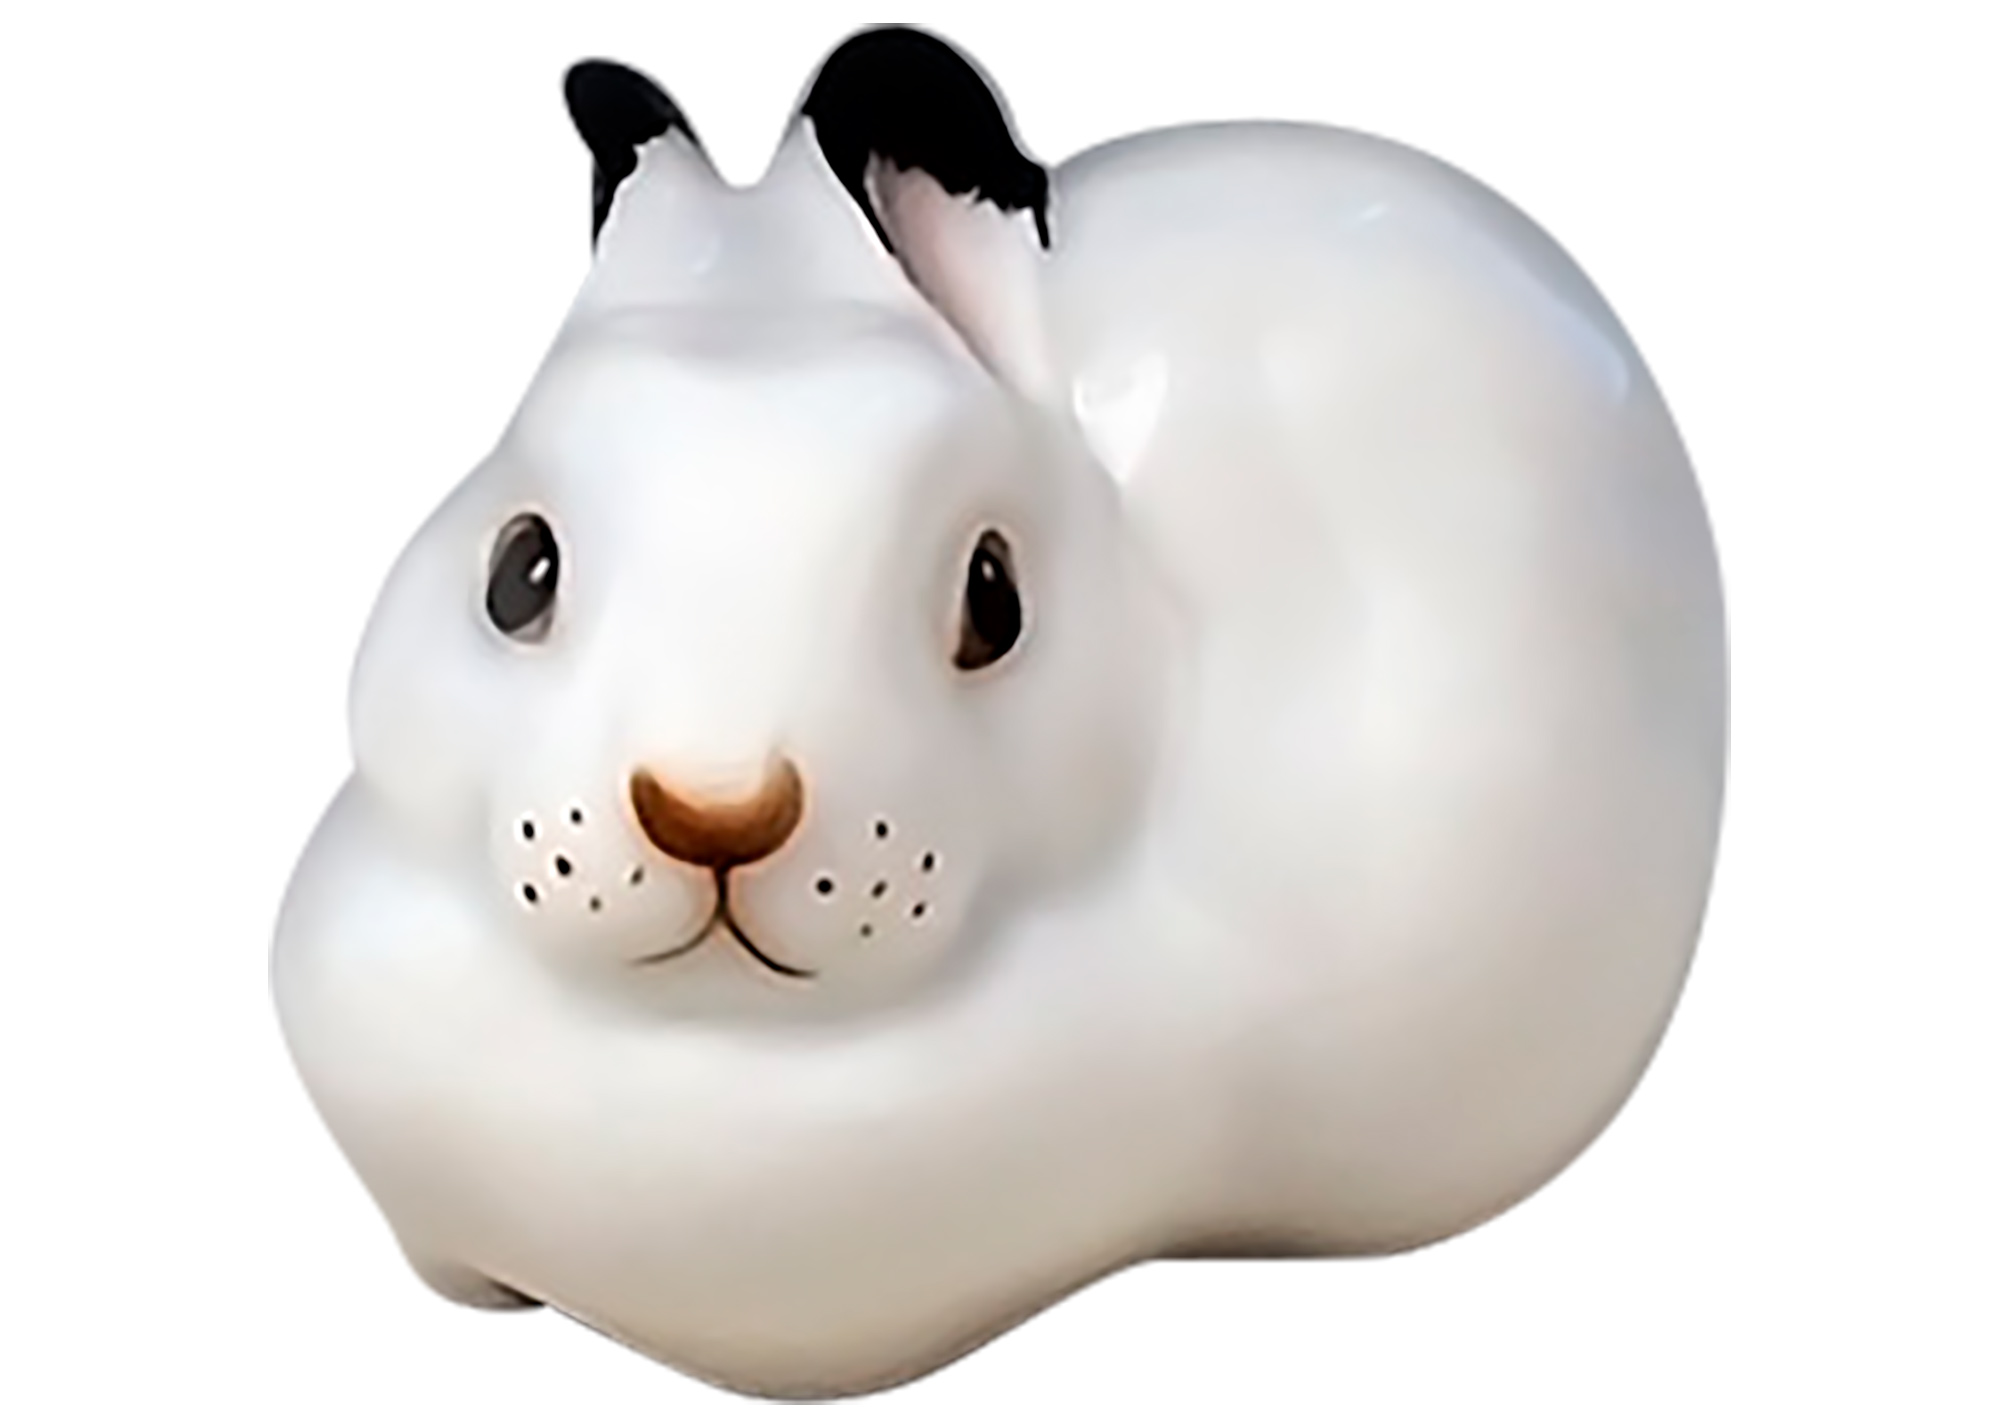 Buy Small White Rabbit Figurine at GoldenCockerel.com